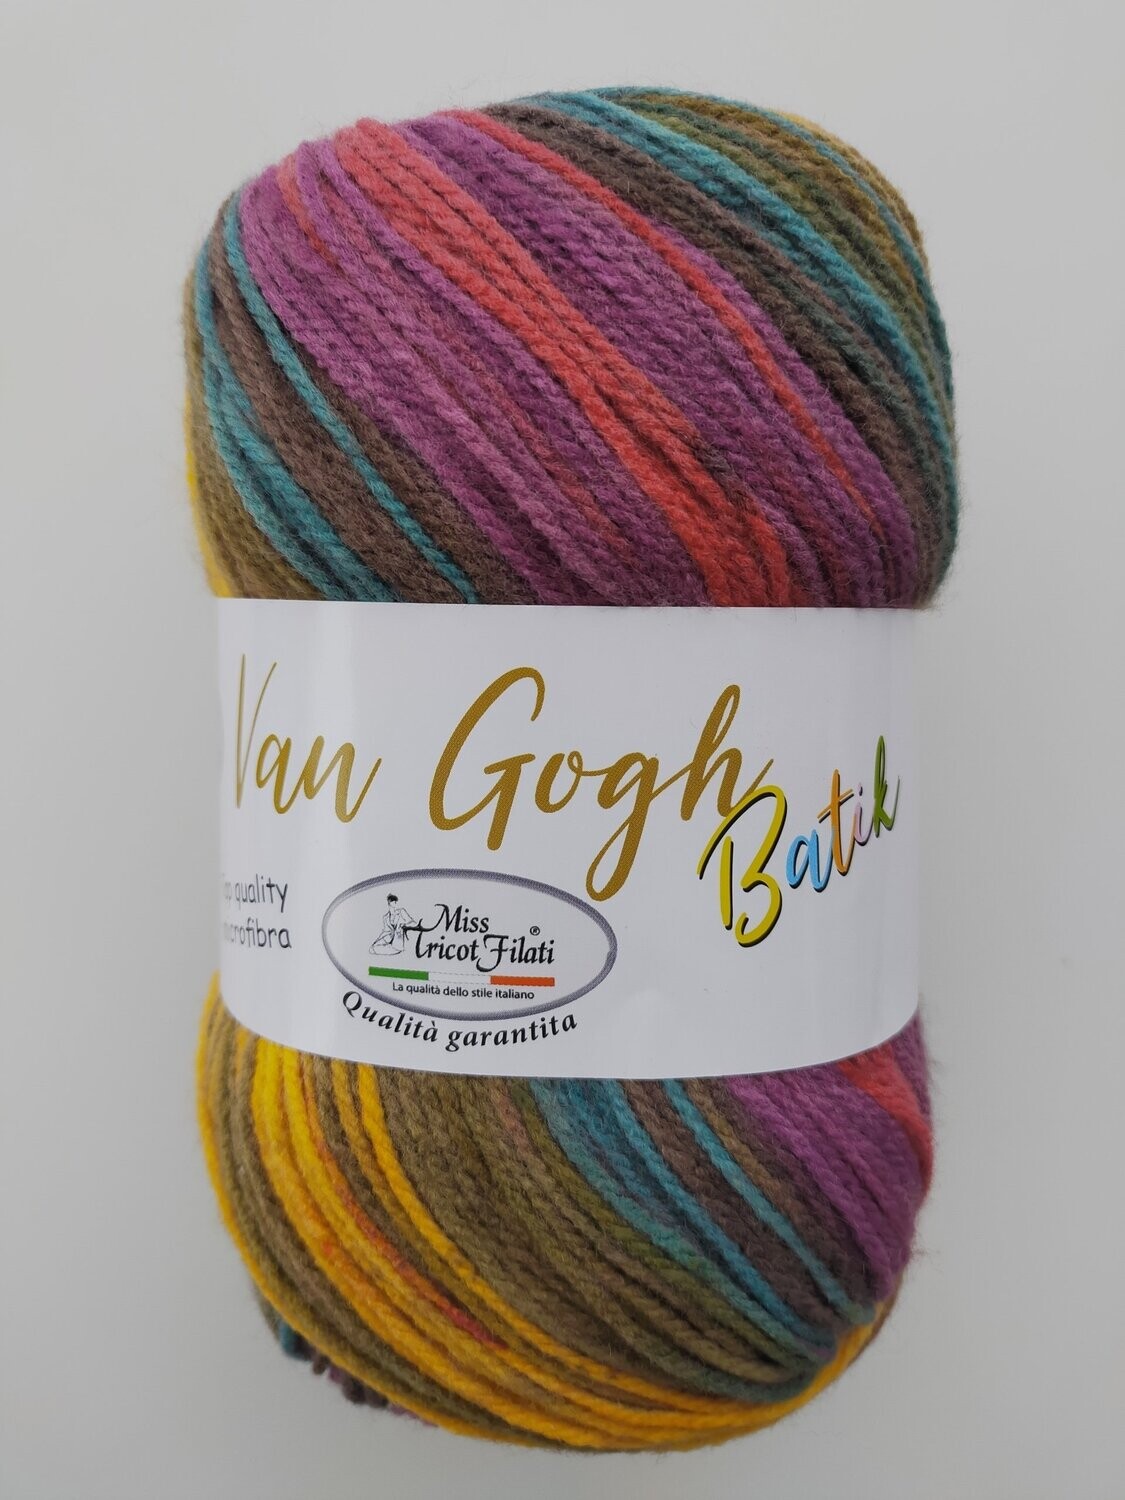 Van Gogh Batik